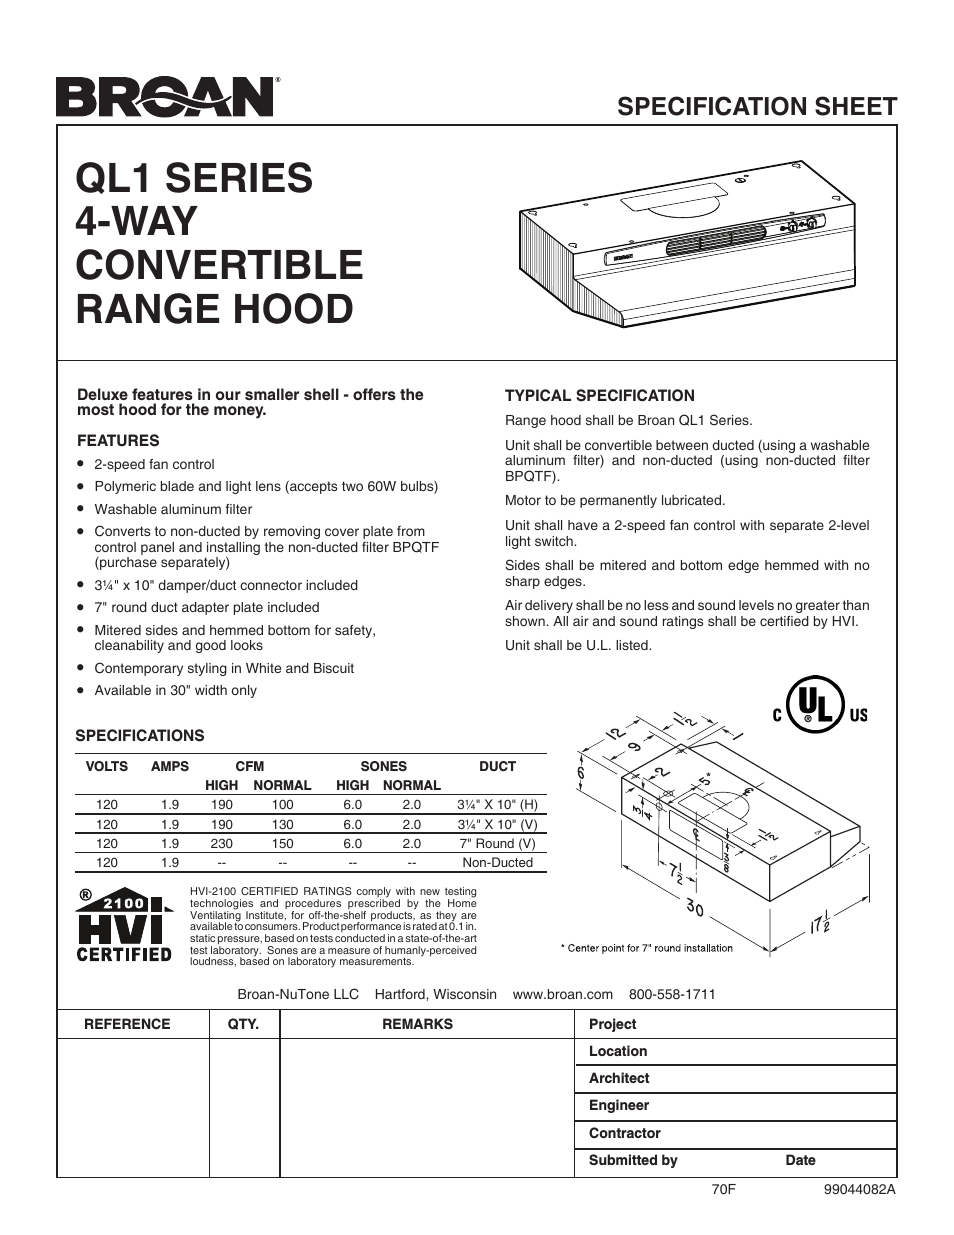 4-Way Convertible Range Hood QL1 Series